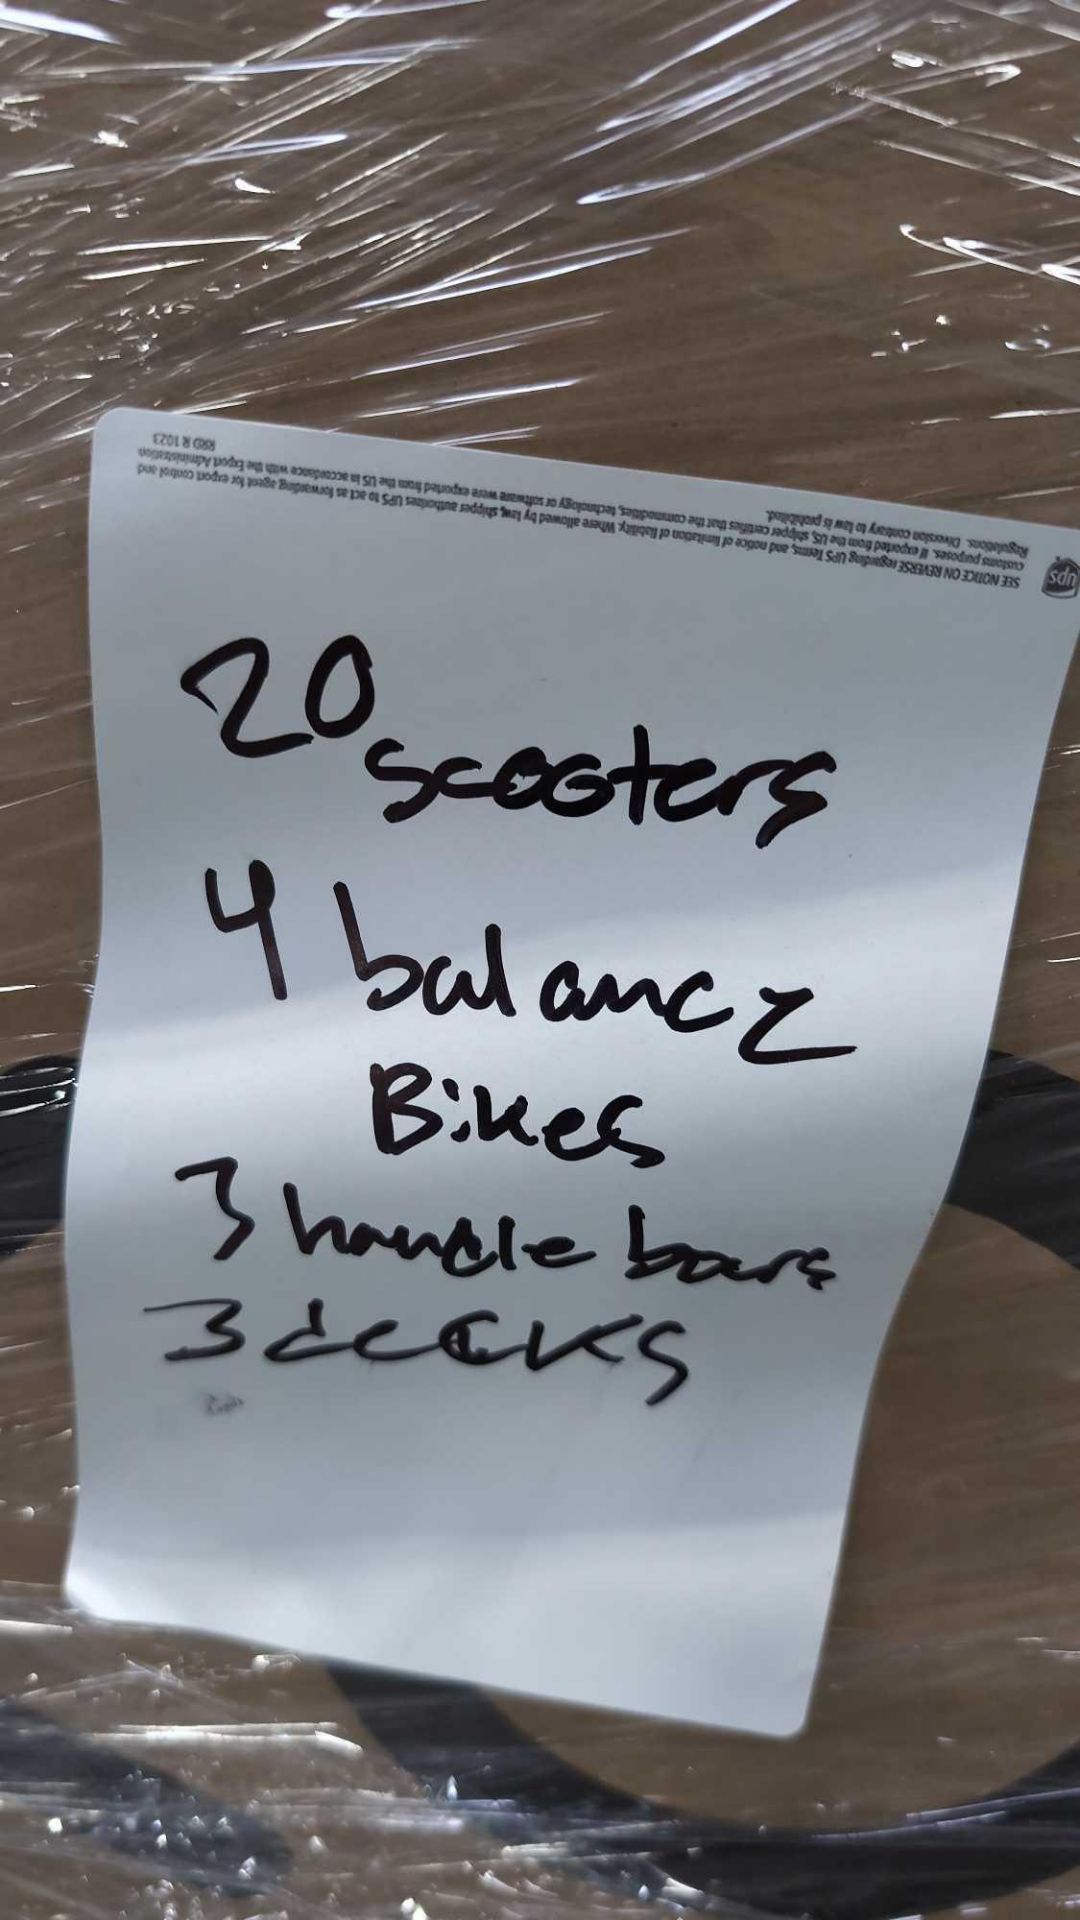 20 Scooters, 4 Balance Bikes, 3 handle bars, 3 Decks - Image 2 of 6